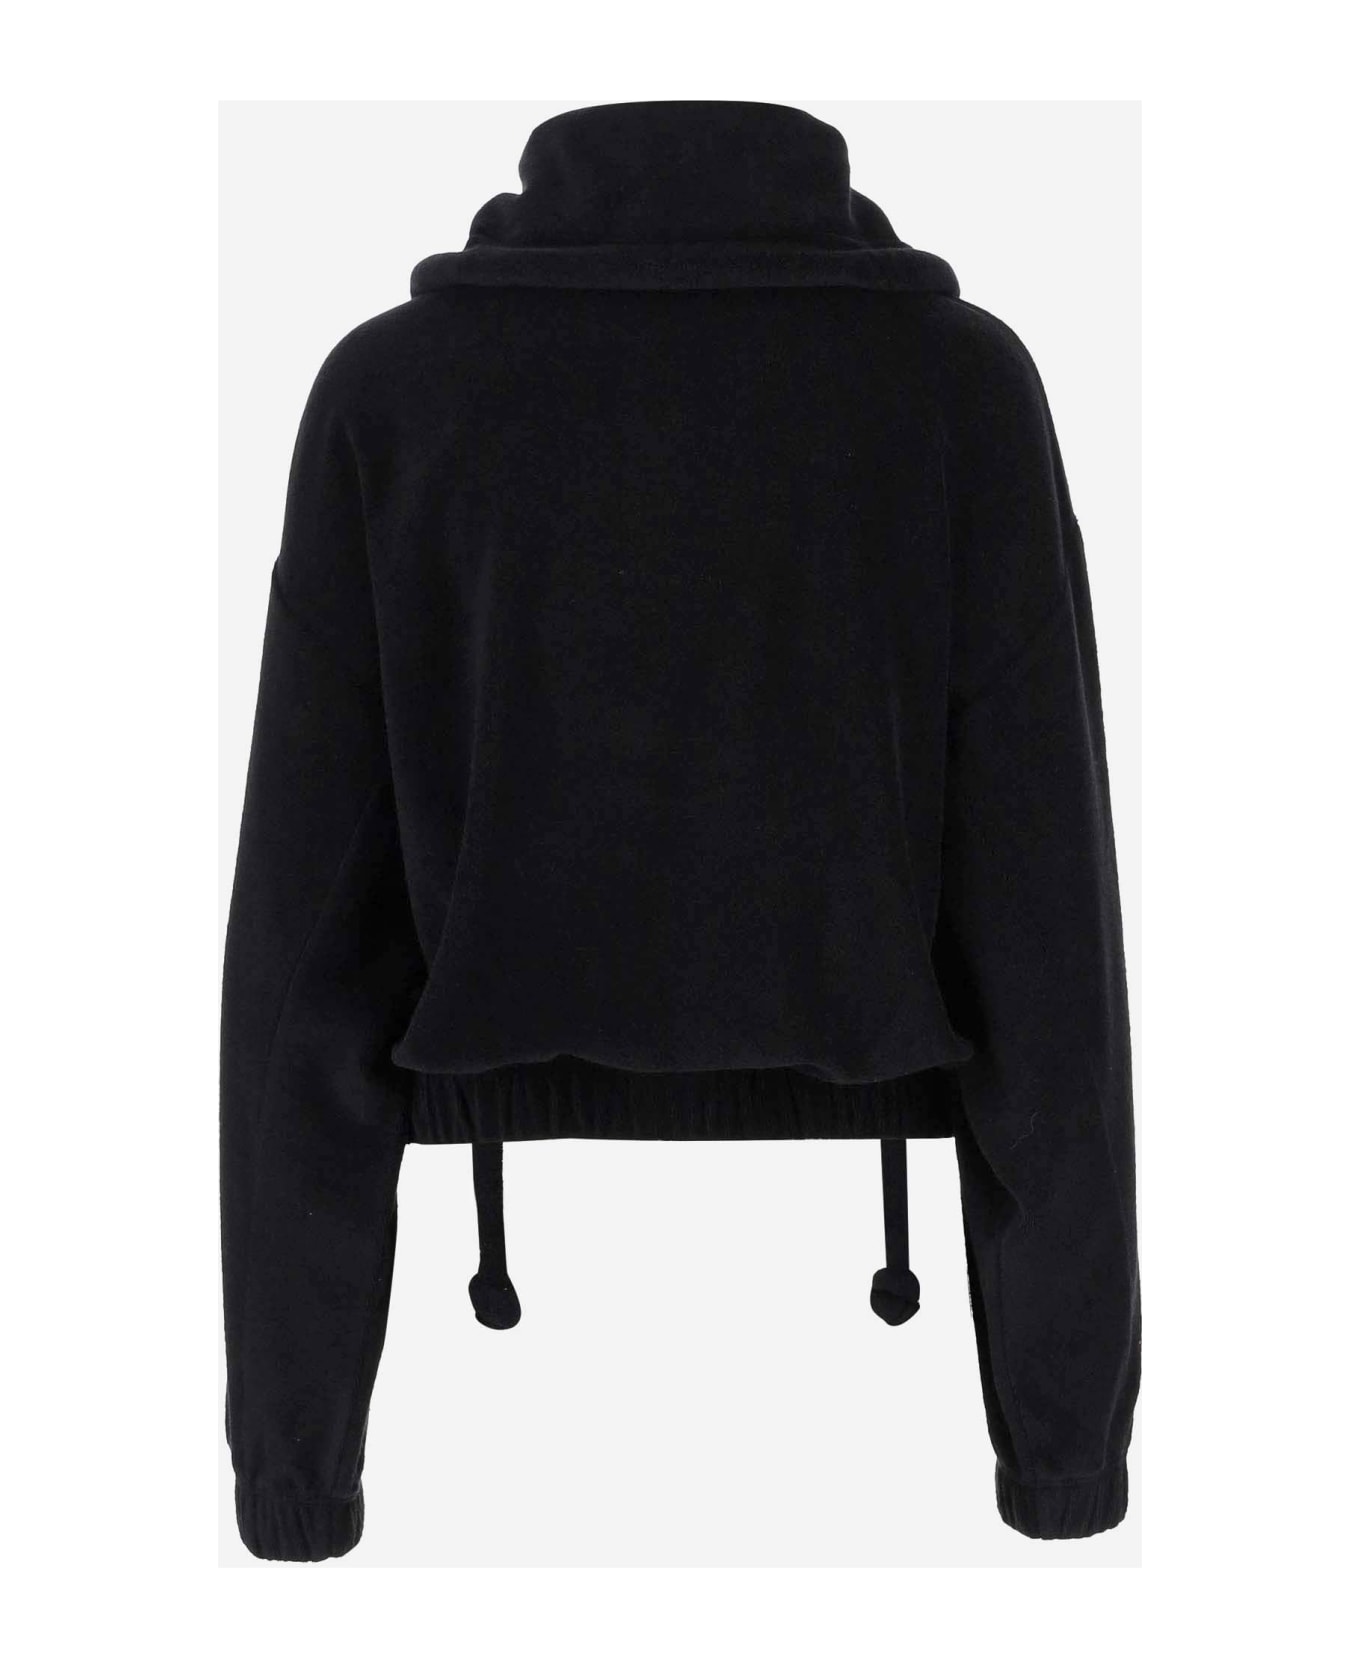 Patou Cotton Sweatshirt With Embossed Patou Signature - Black ニットウェア